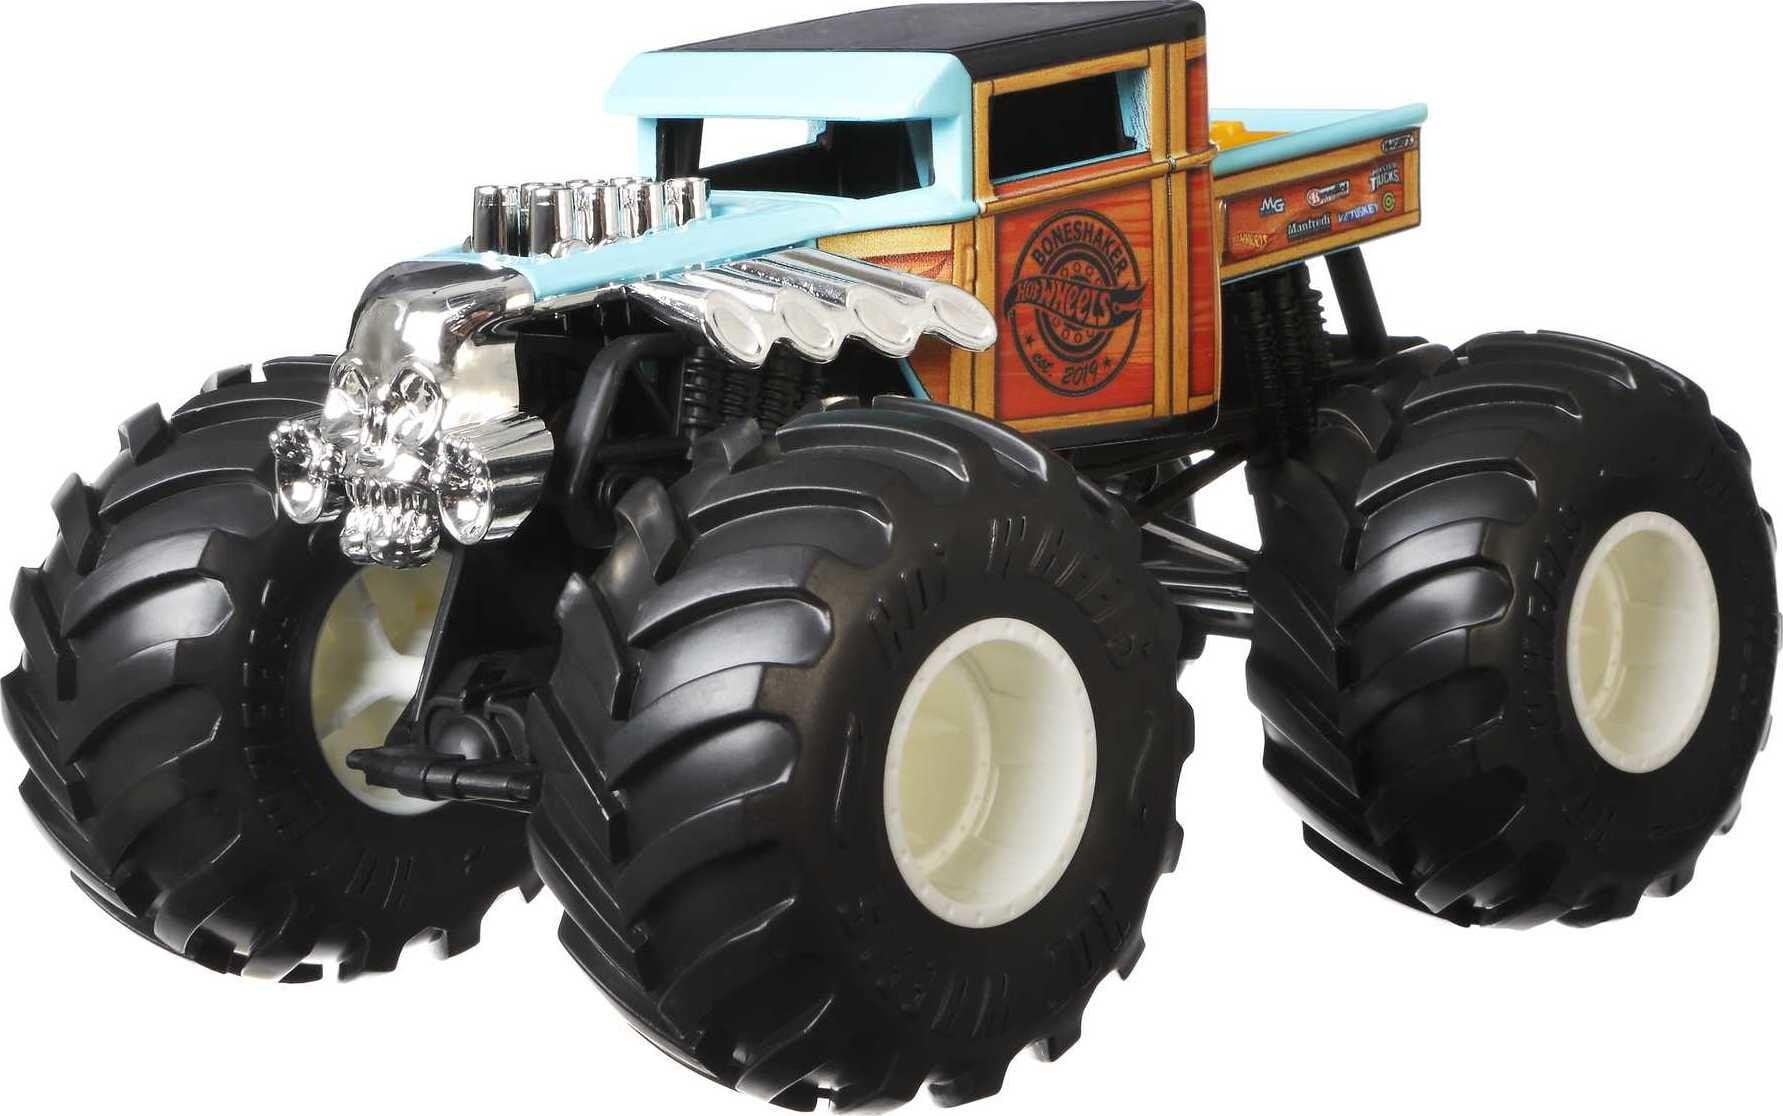 Hot Wheels Monster Trucks 1:24 Scale Bone Shaker Vehicle 